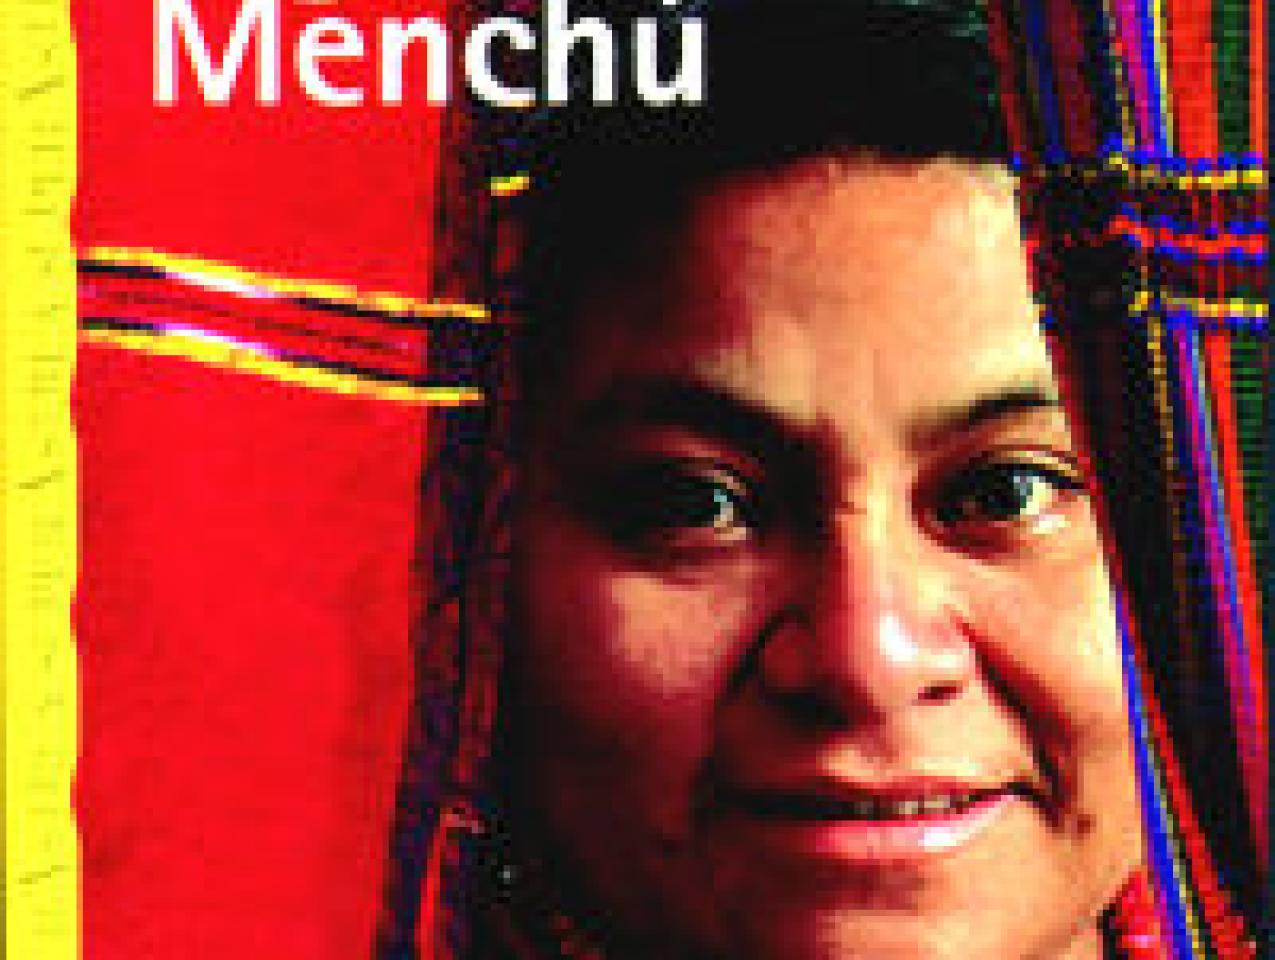 Italian translation of Menchú’s autobiography, I, Rigoberta Menchú, dictated to Elizabeth Burgos.